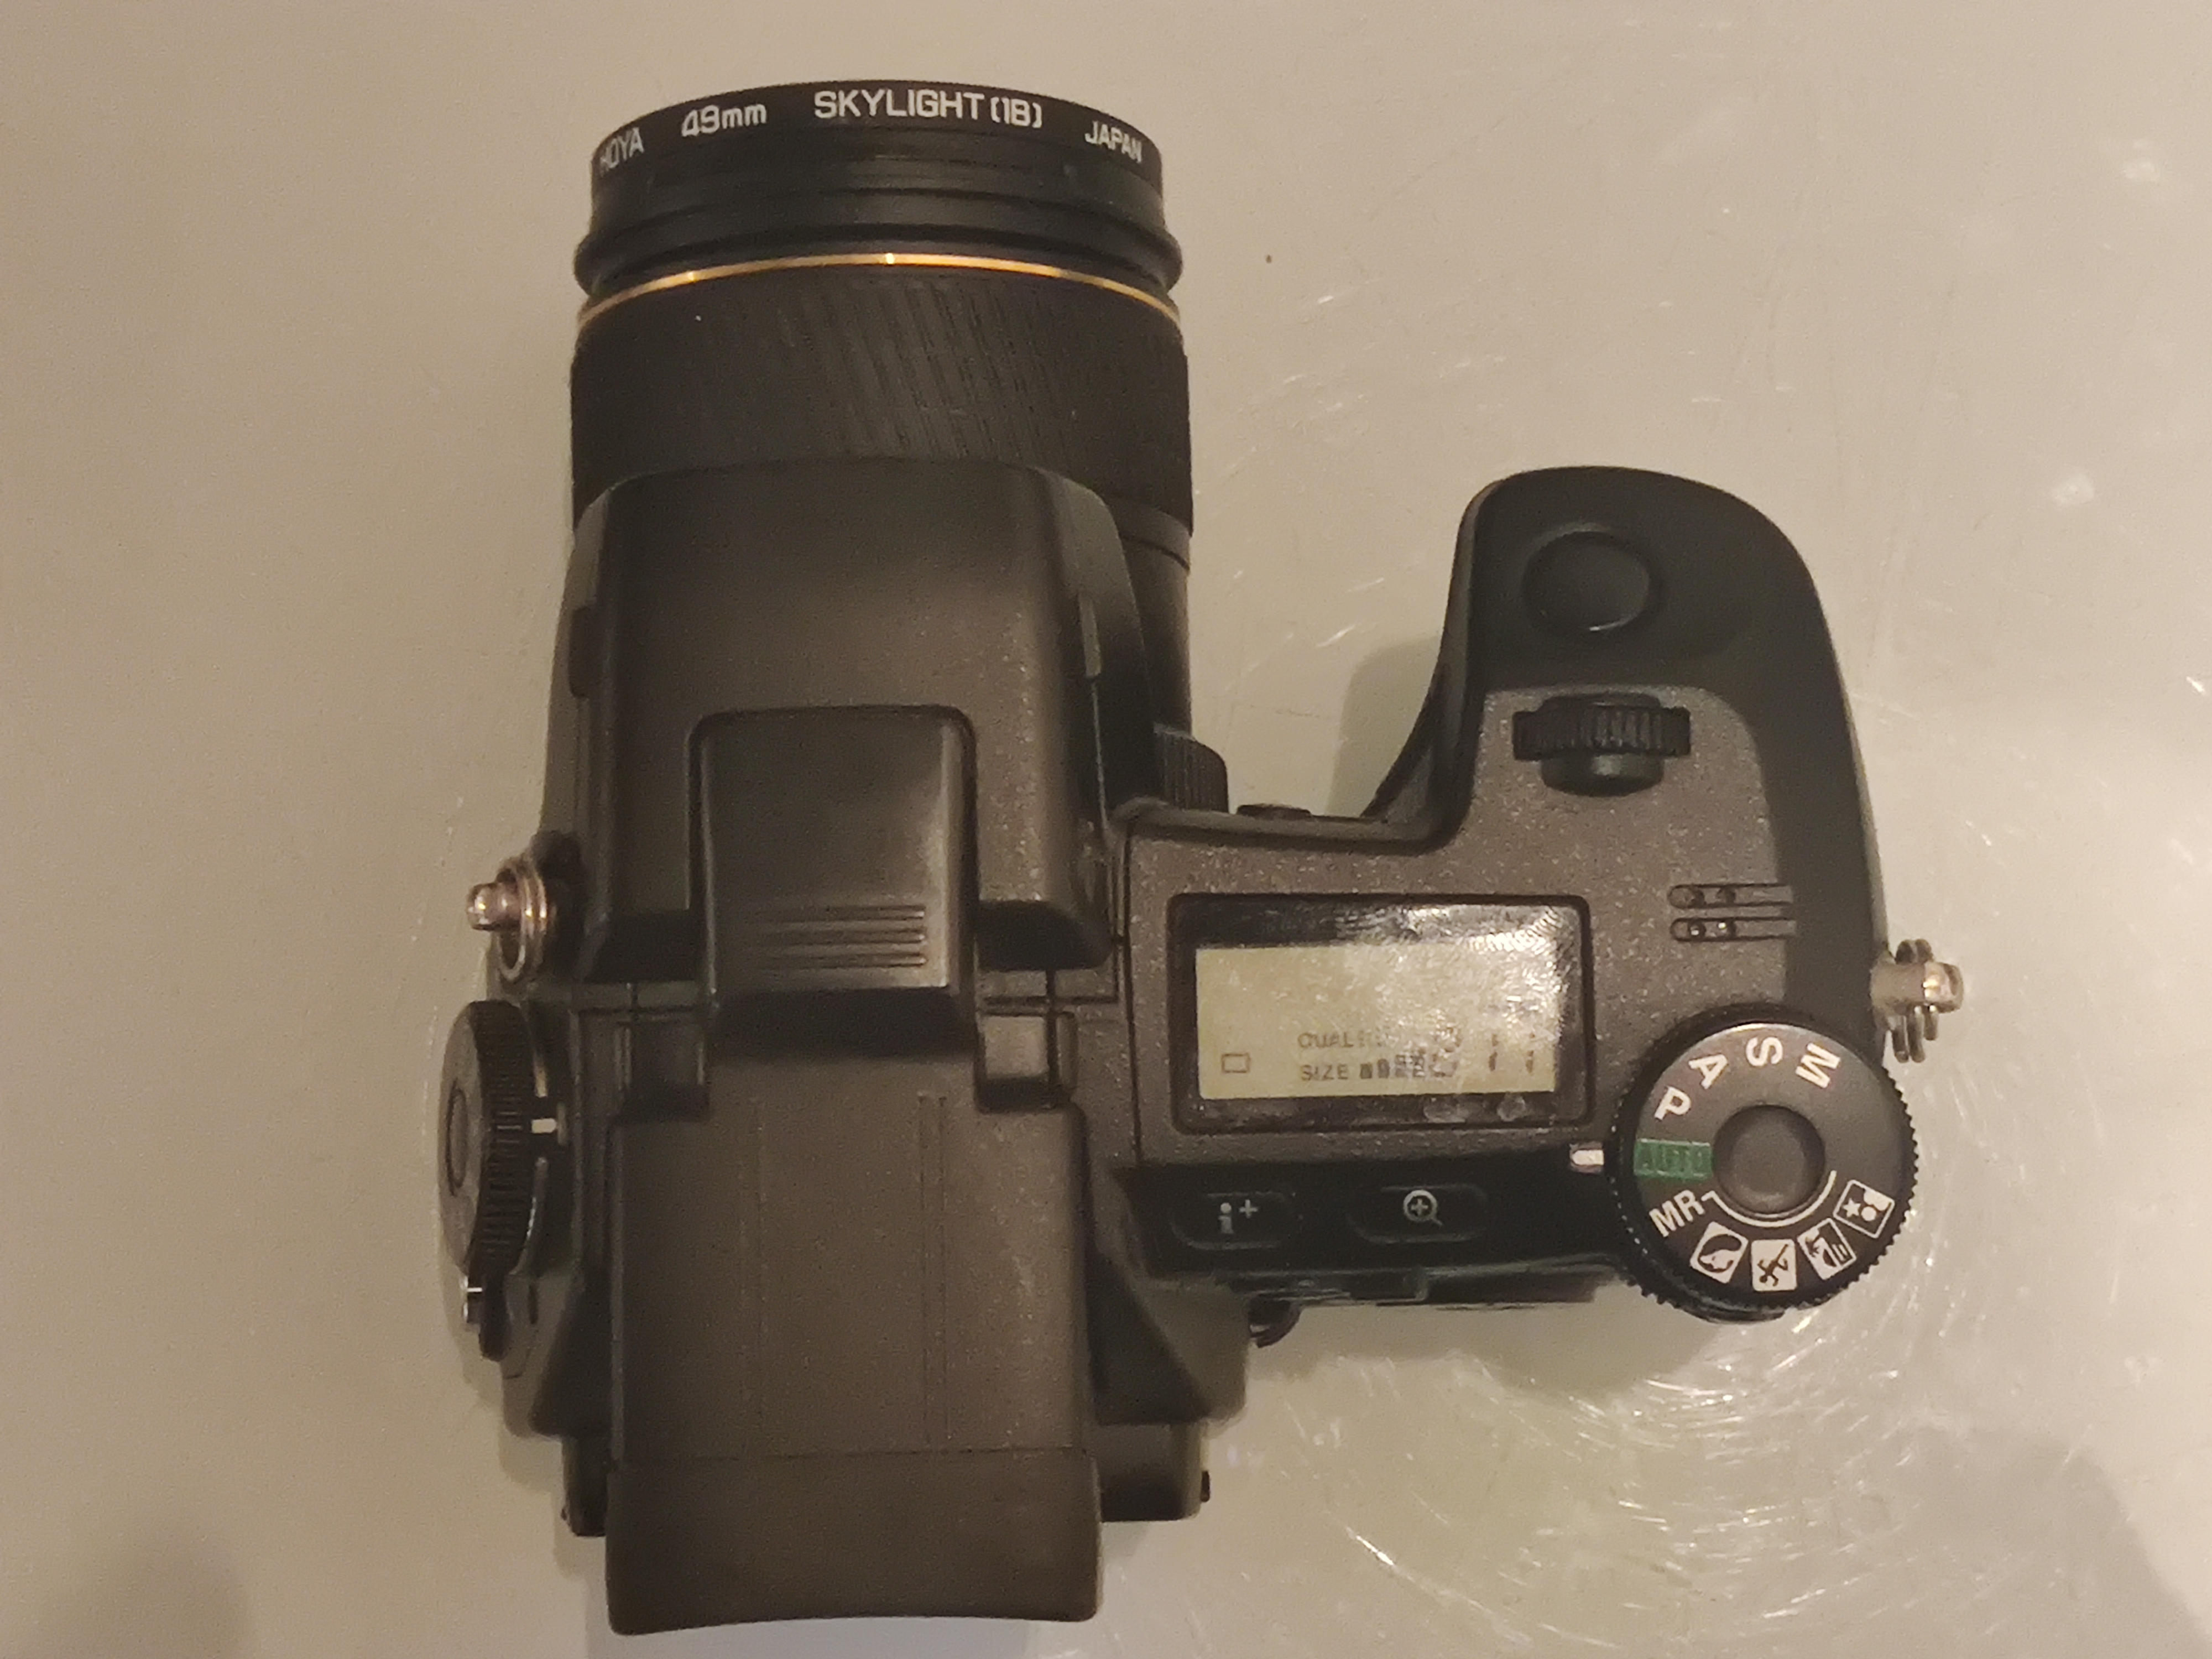 A Konica Minolta Dimage A2 Digital Camera Kit. 2 X Batteries, Wide Lens Converter and More. - Image 4 of 7